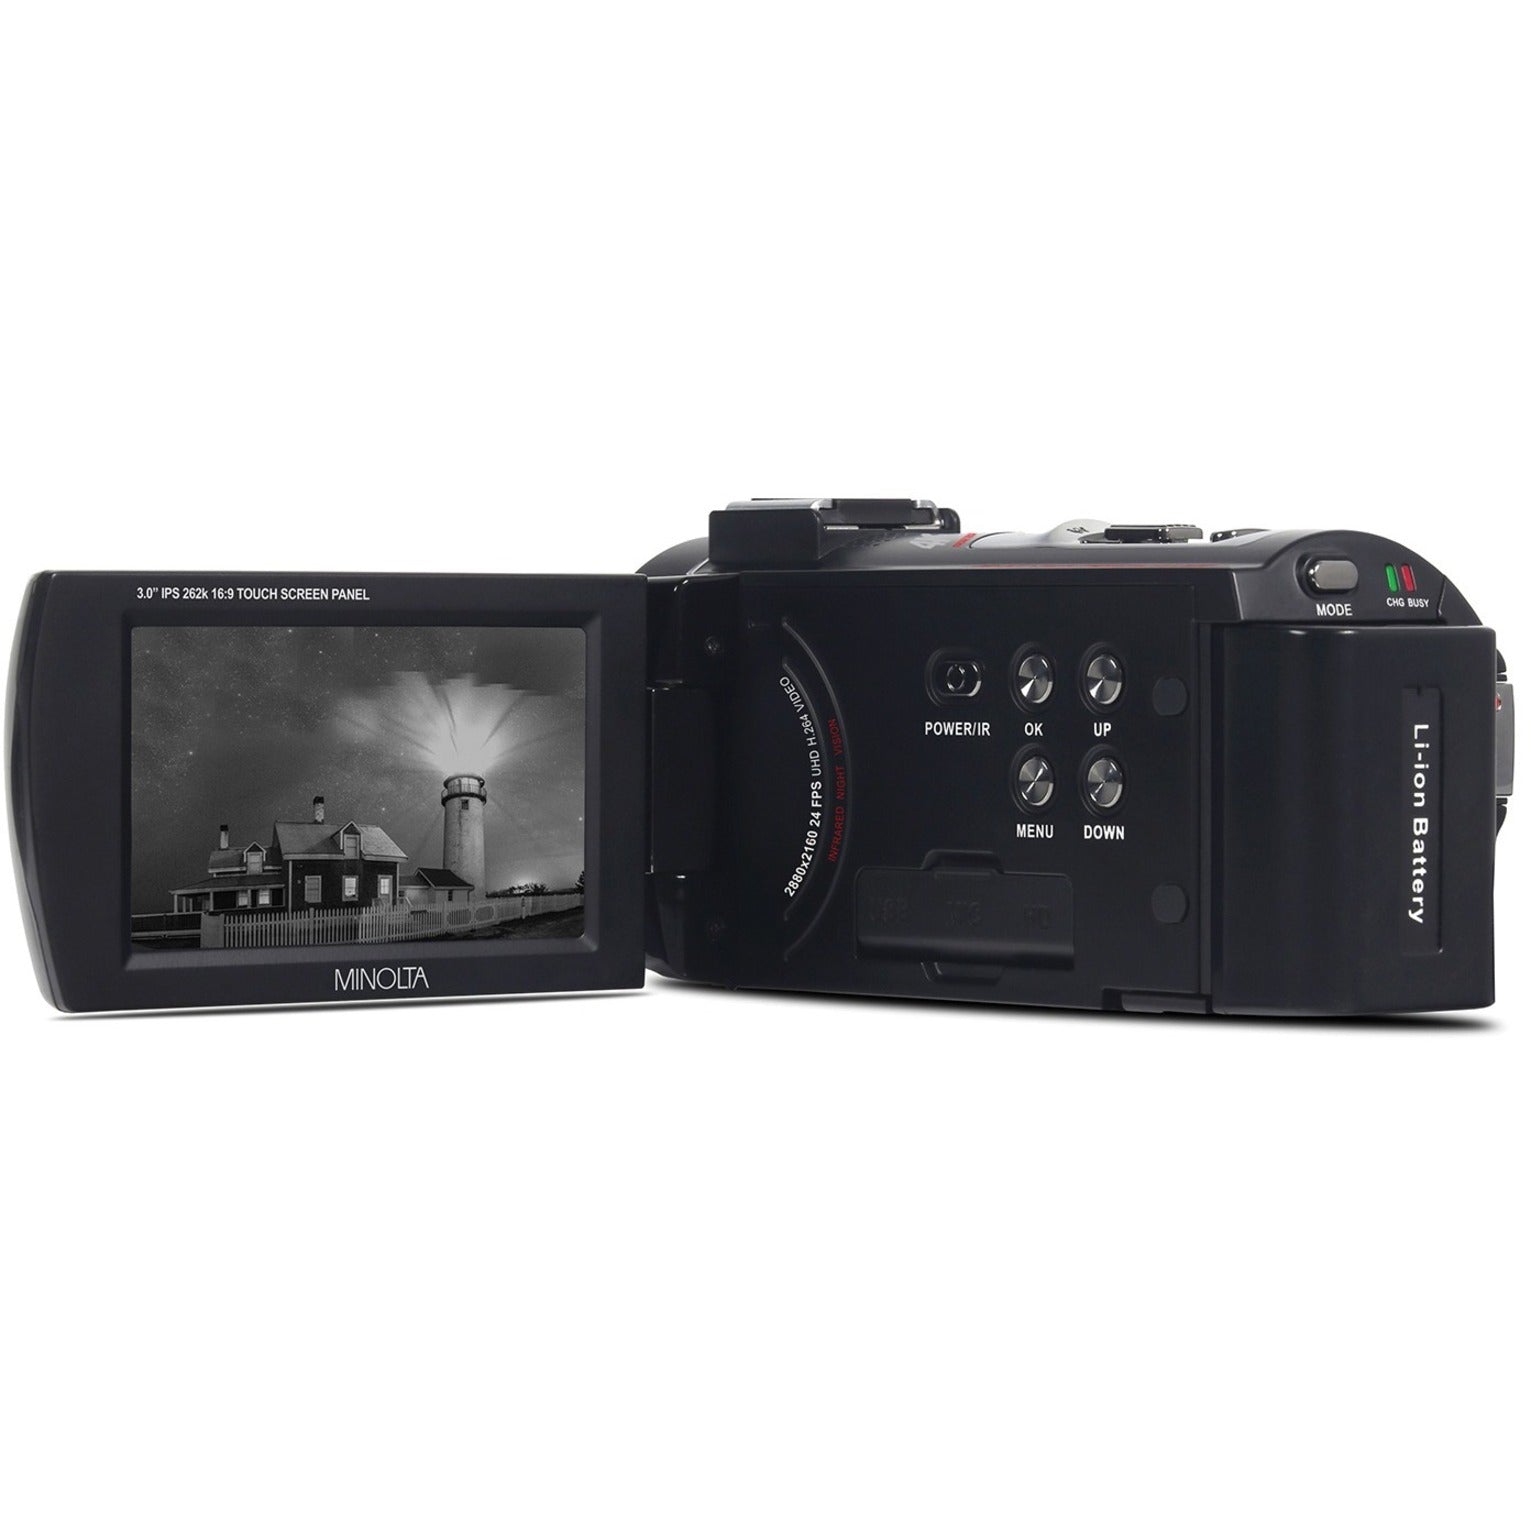 Konica Minolta MN4K20NV Digital Camcorder, 4K Ultra HD IR Night Vision, Optical Image Stabilization